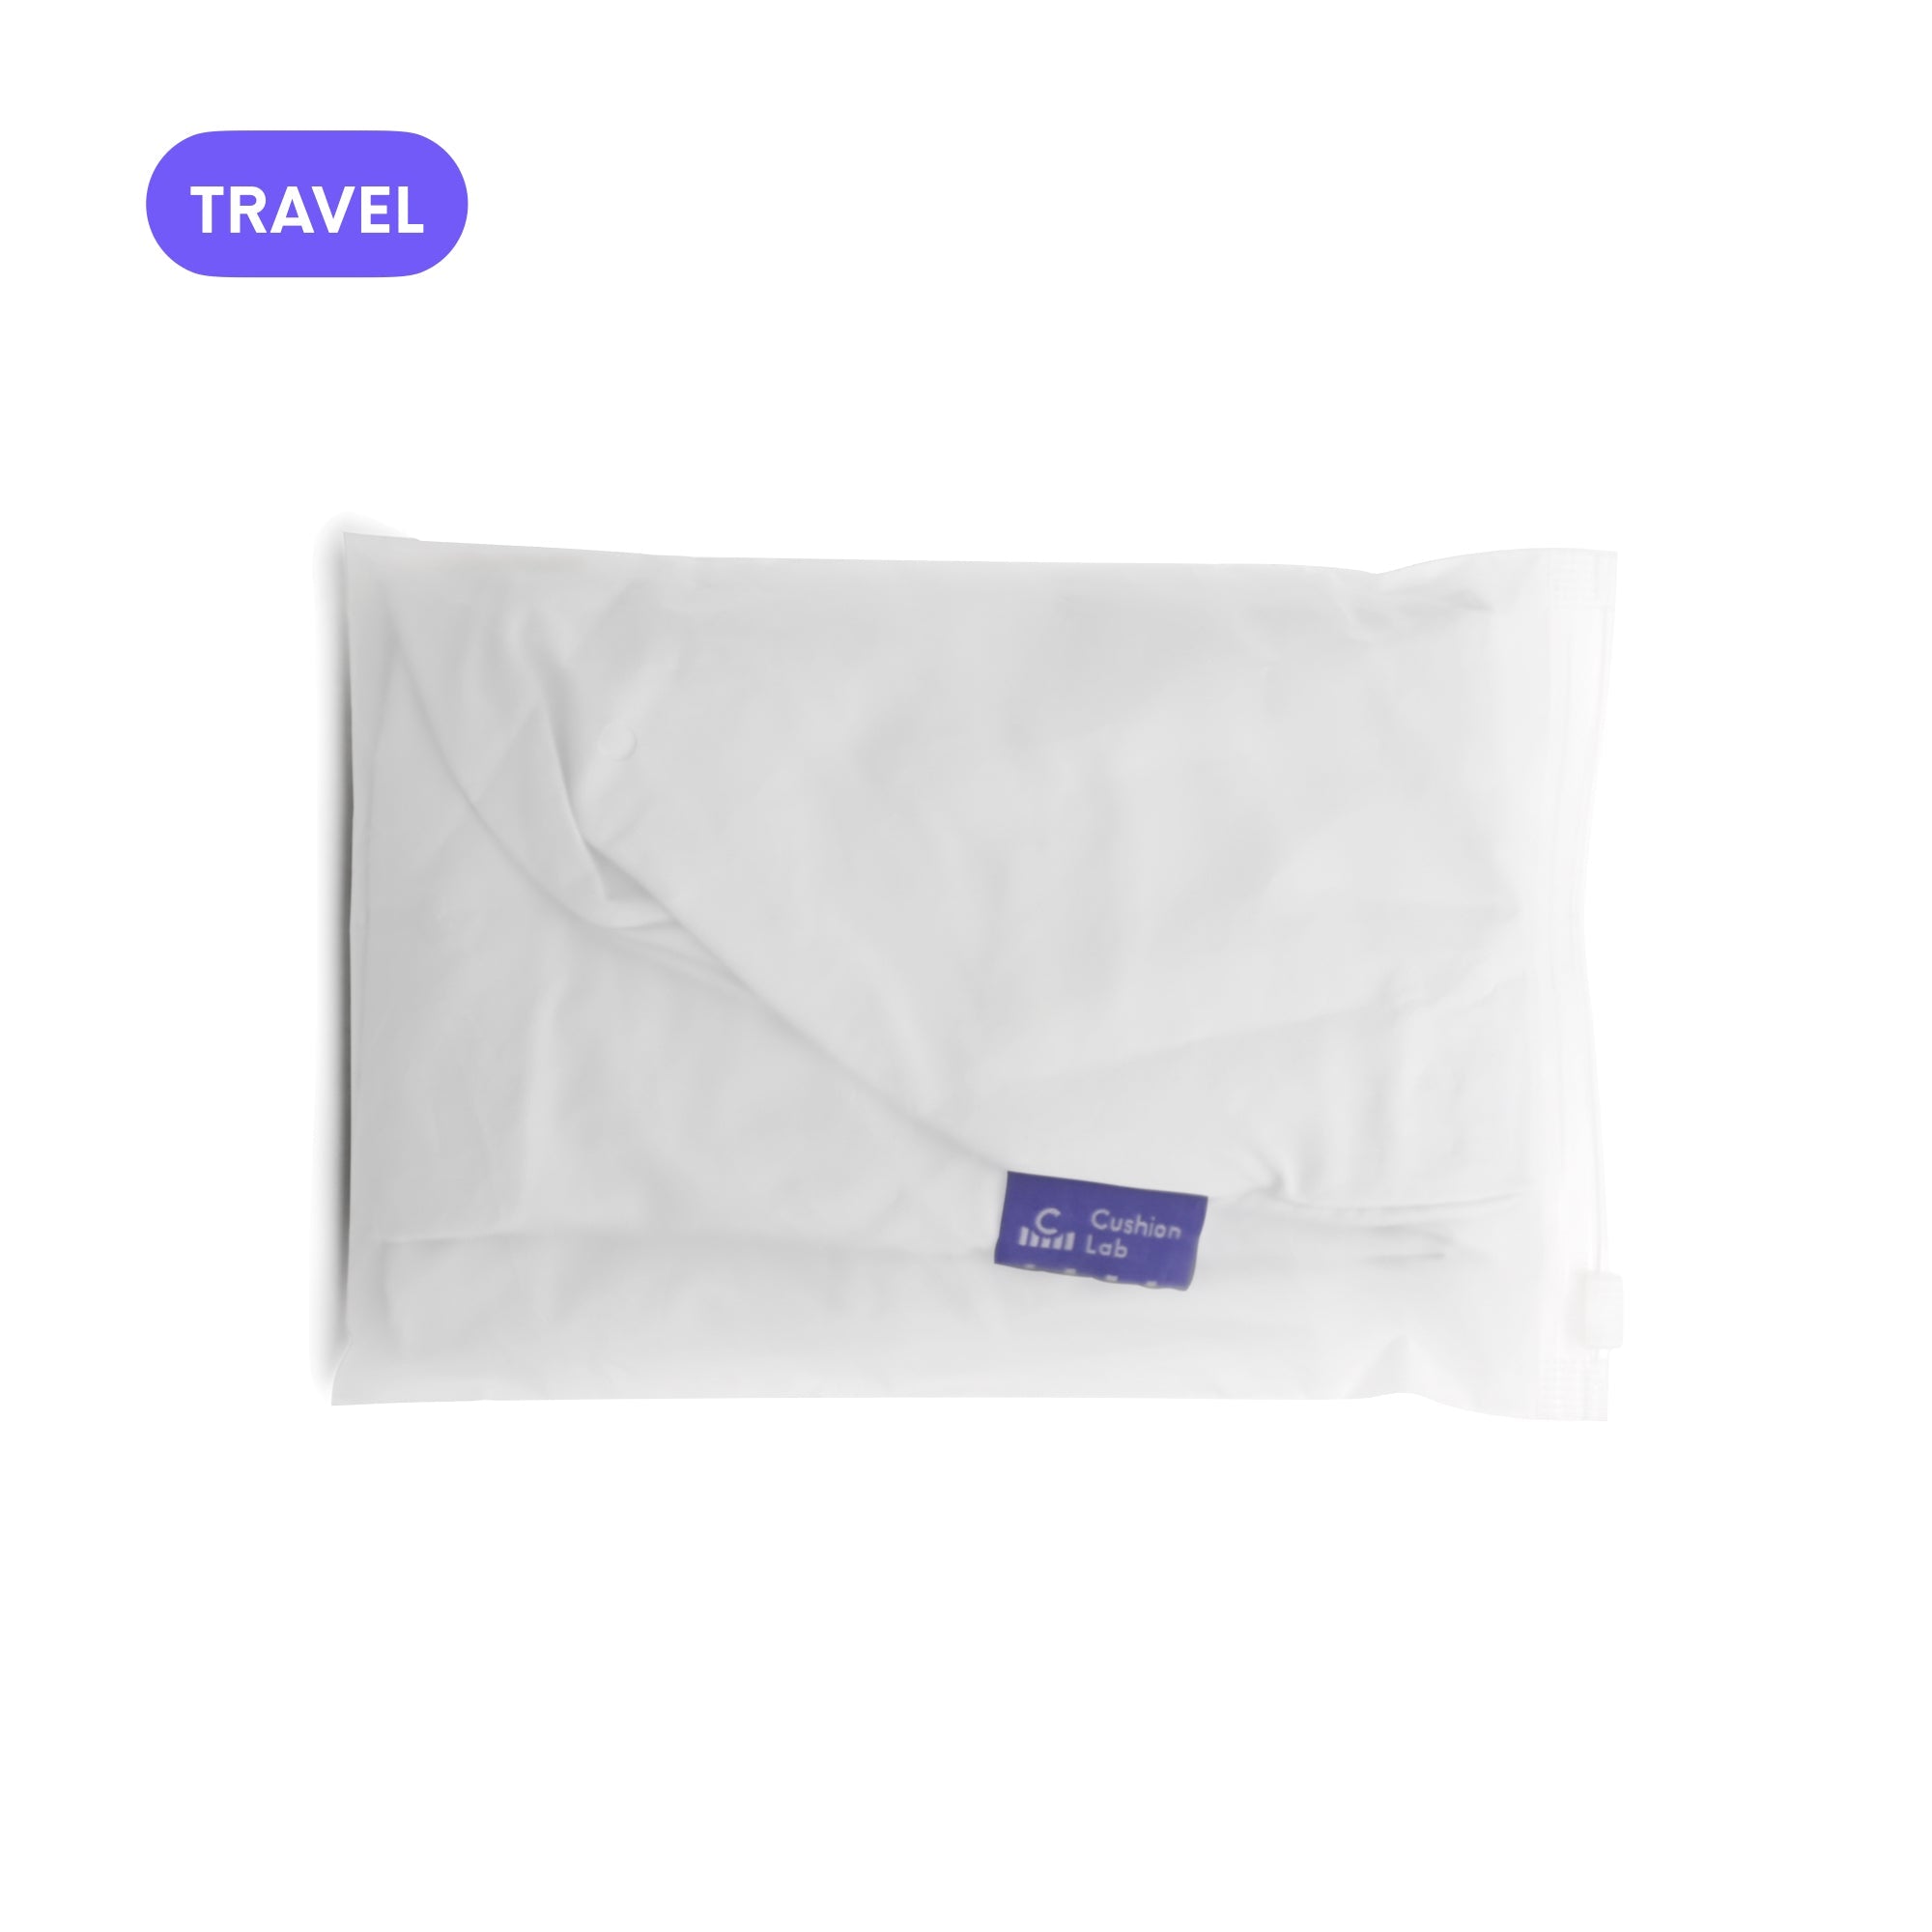 Cushion Lab Travel Deep Sleep Pillow - Black